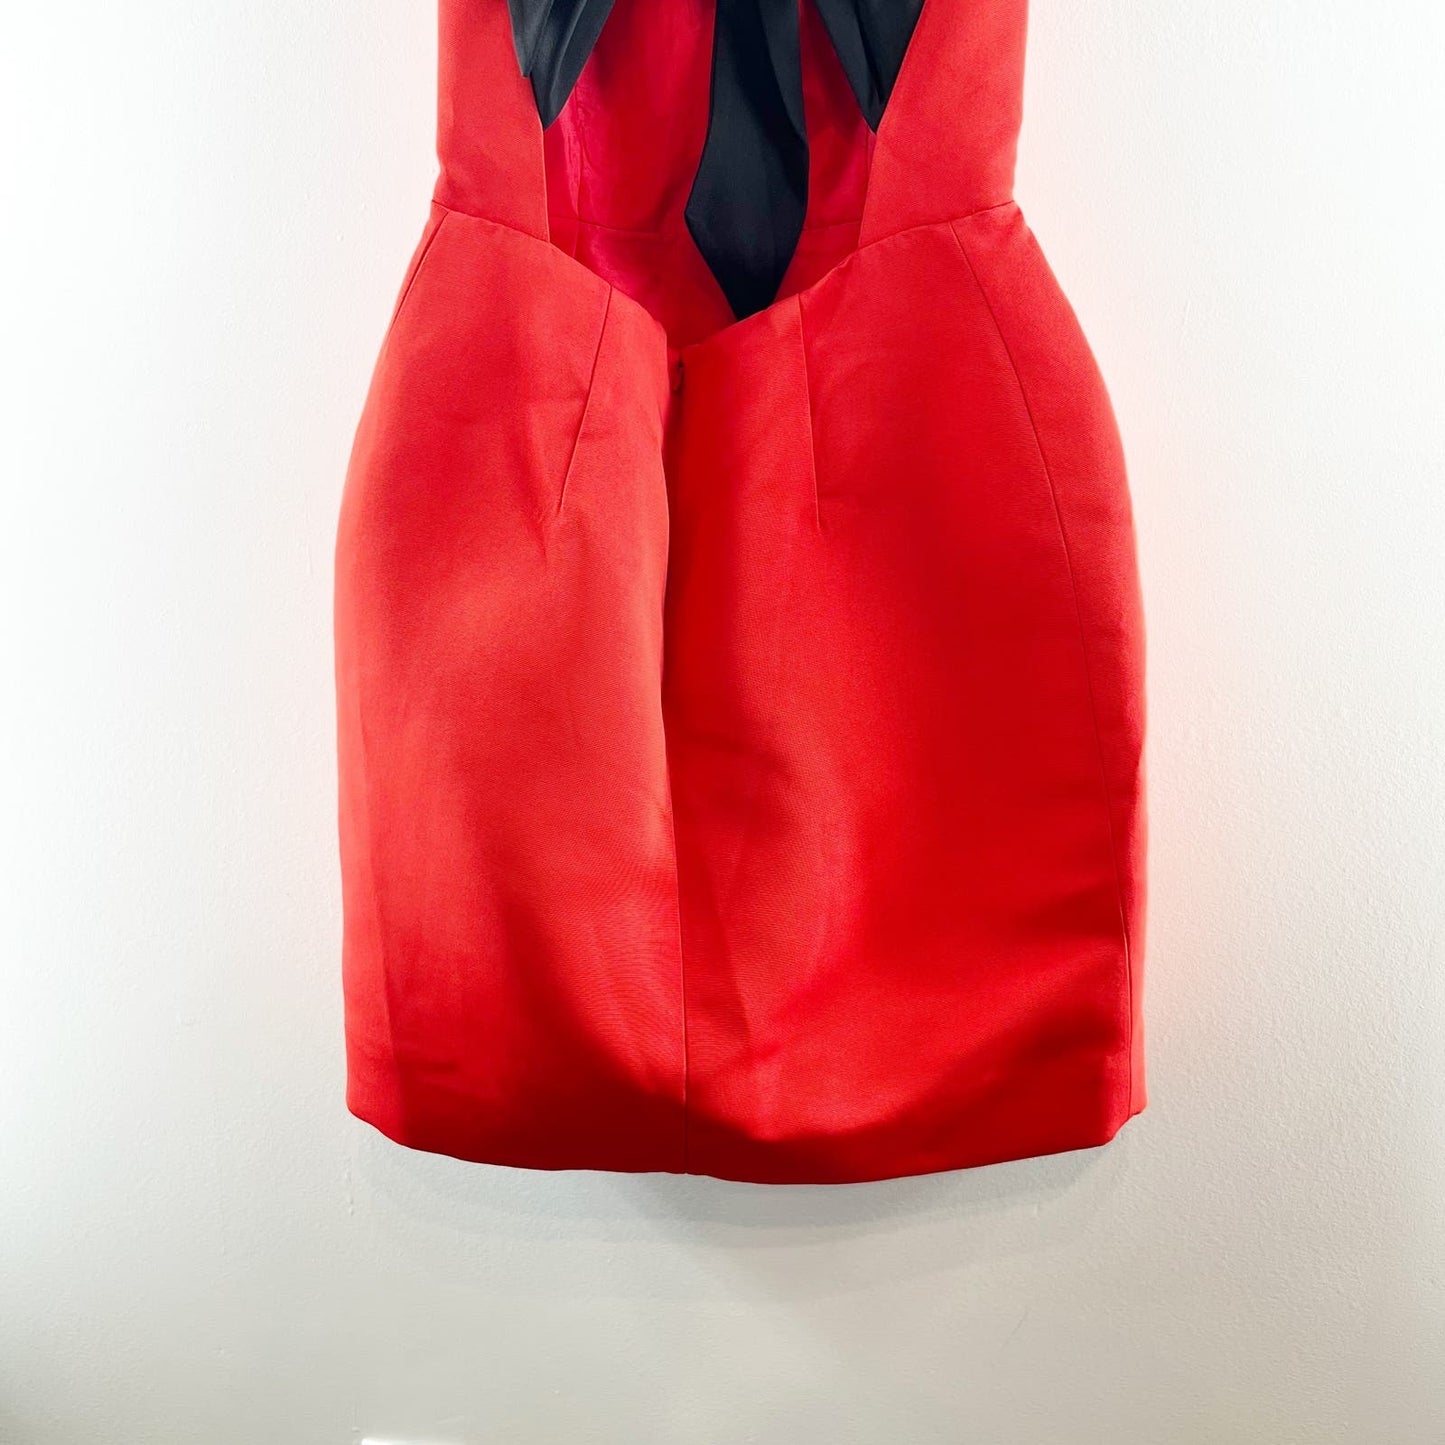 Kate Spade New York Blaze A Trail Bow Back Mini Dress Lollipop Red Dress Red 4